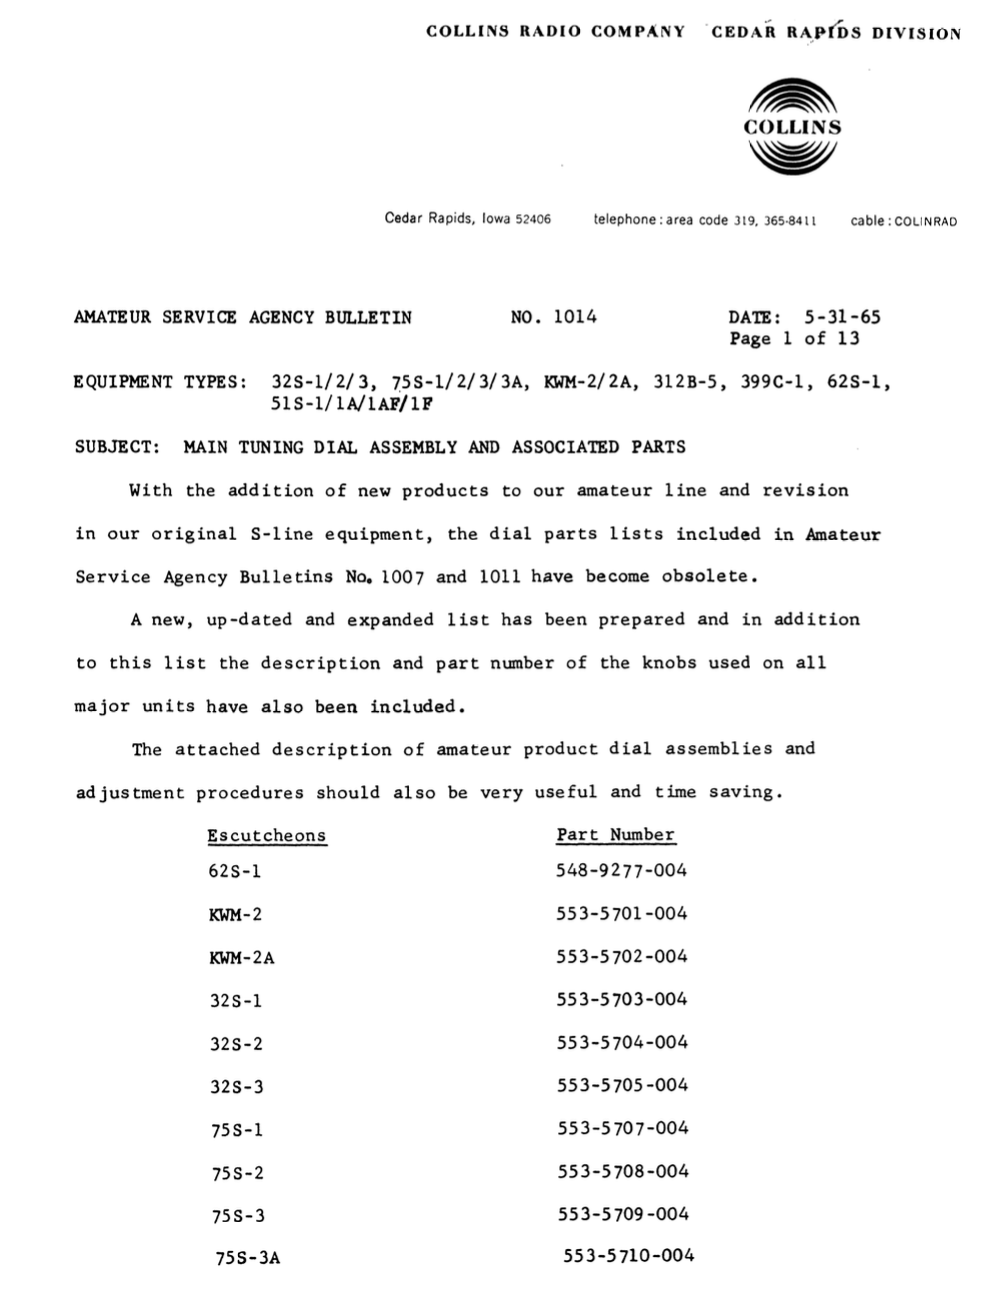 Collins Amateur Service Agency Bulletin Number 1014 (1965-05)